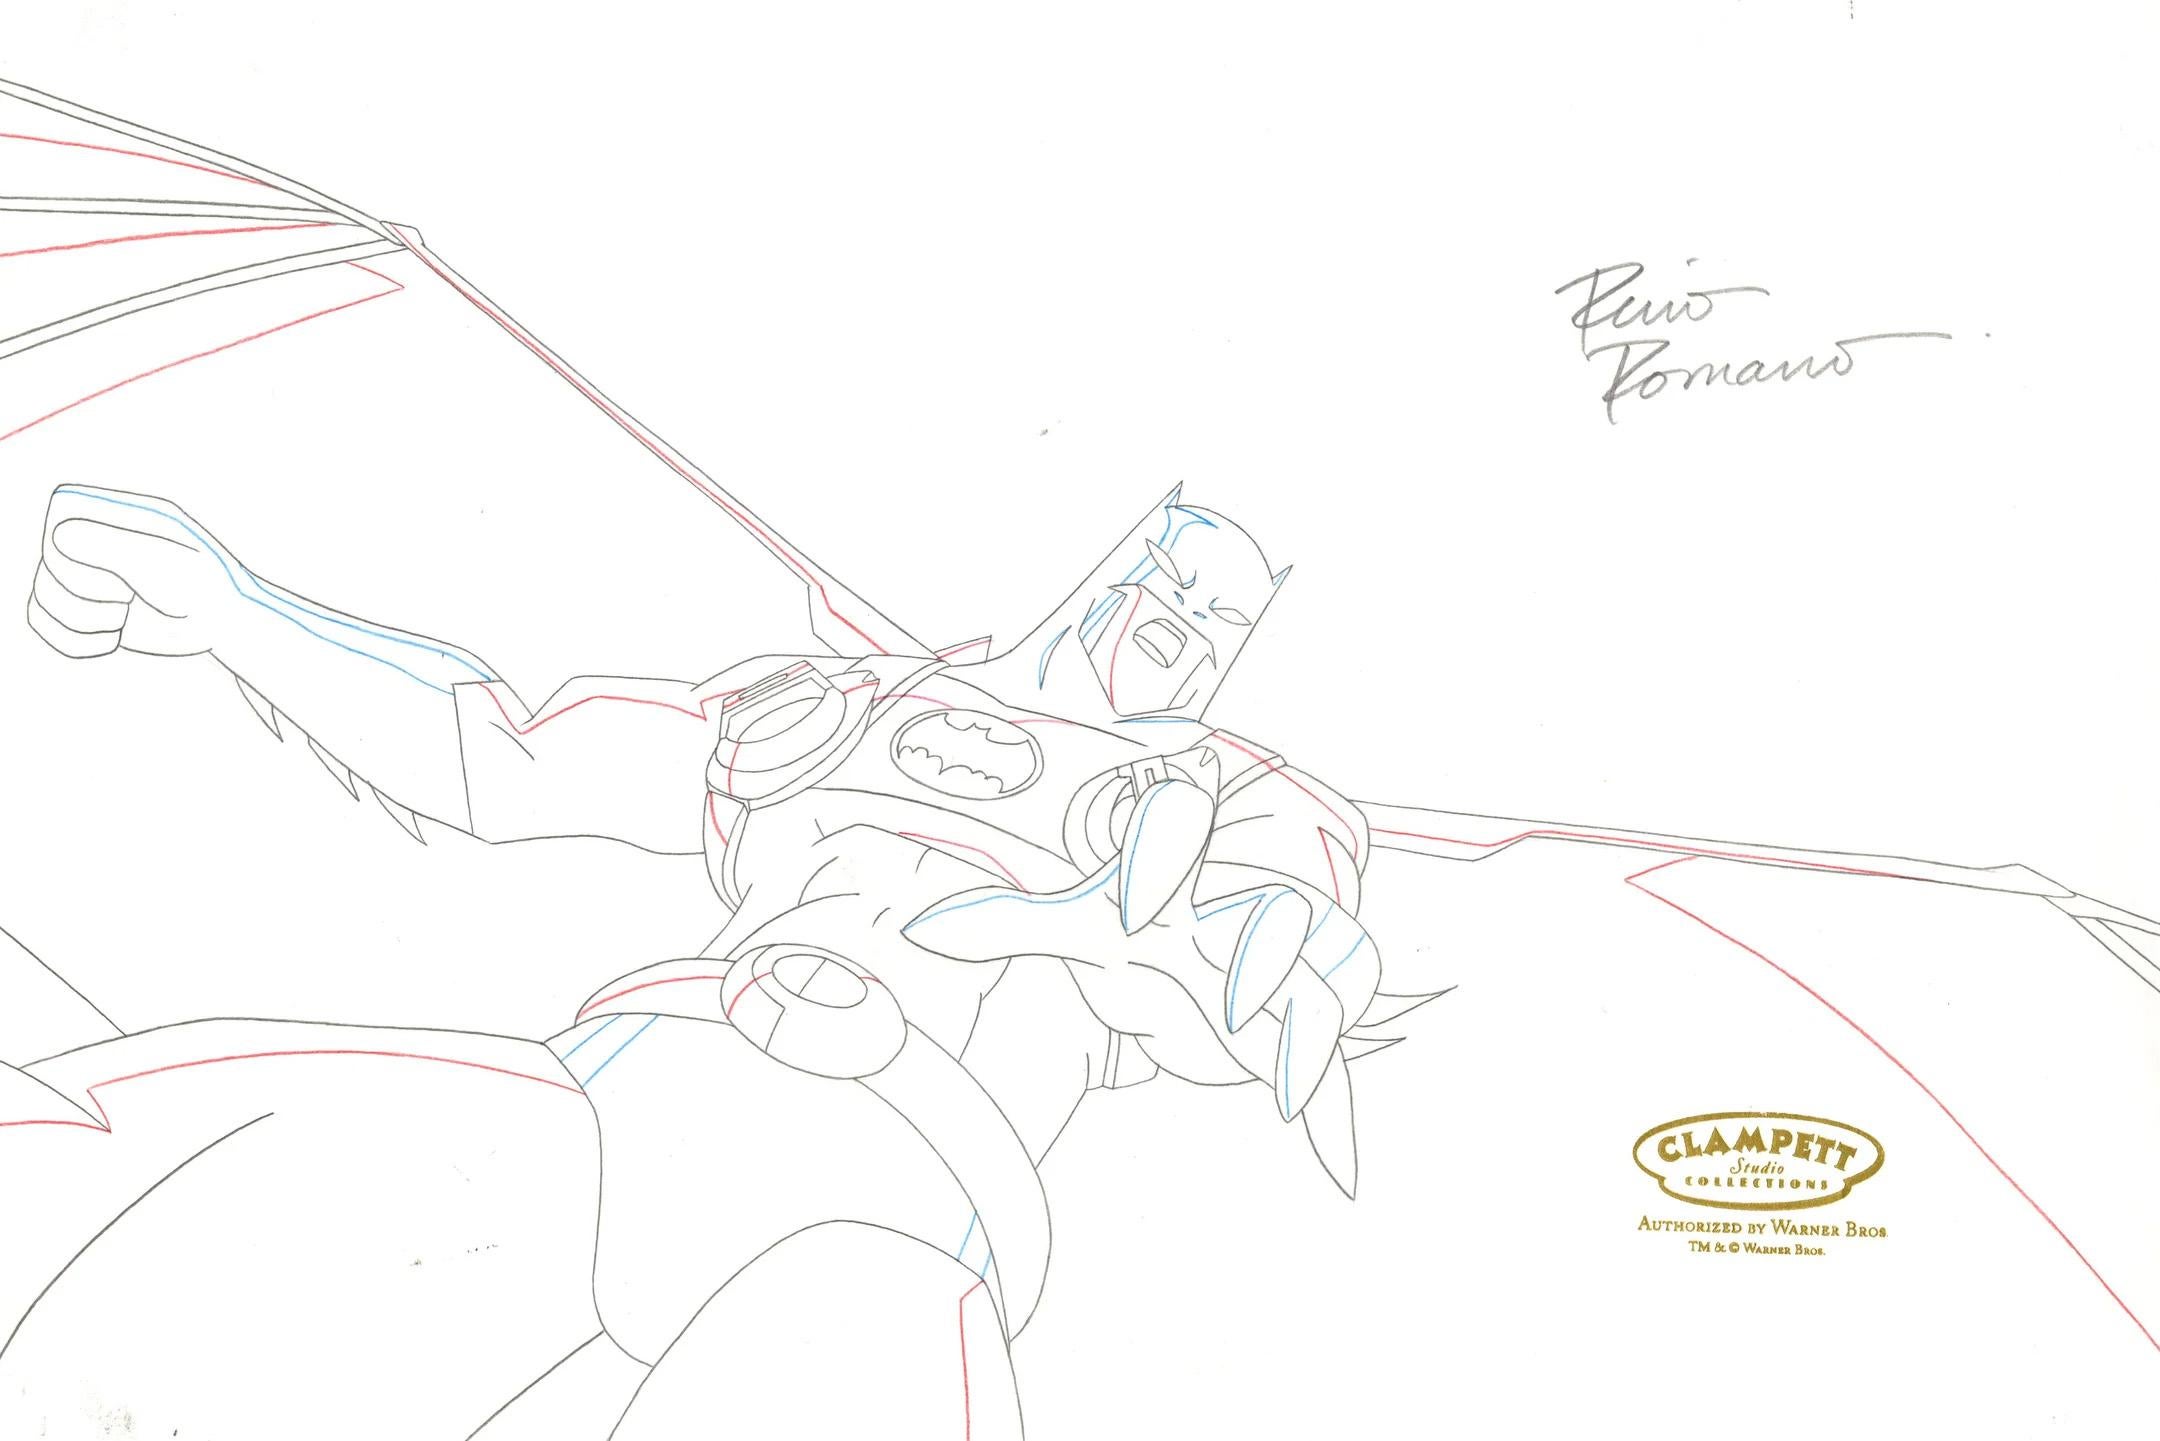 The Batman Original Production Drawing Signed By Rino Romano: Batman - Art by DC Comics Studio Artists